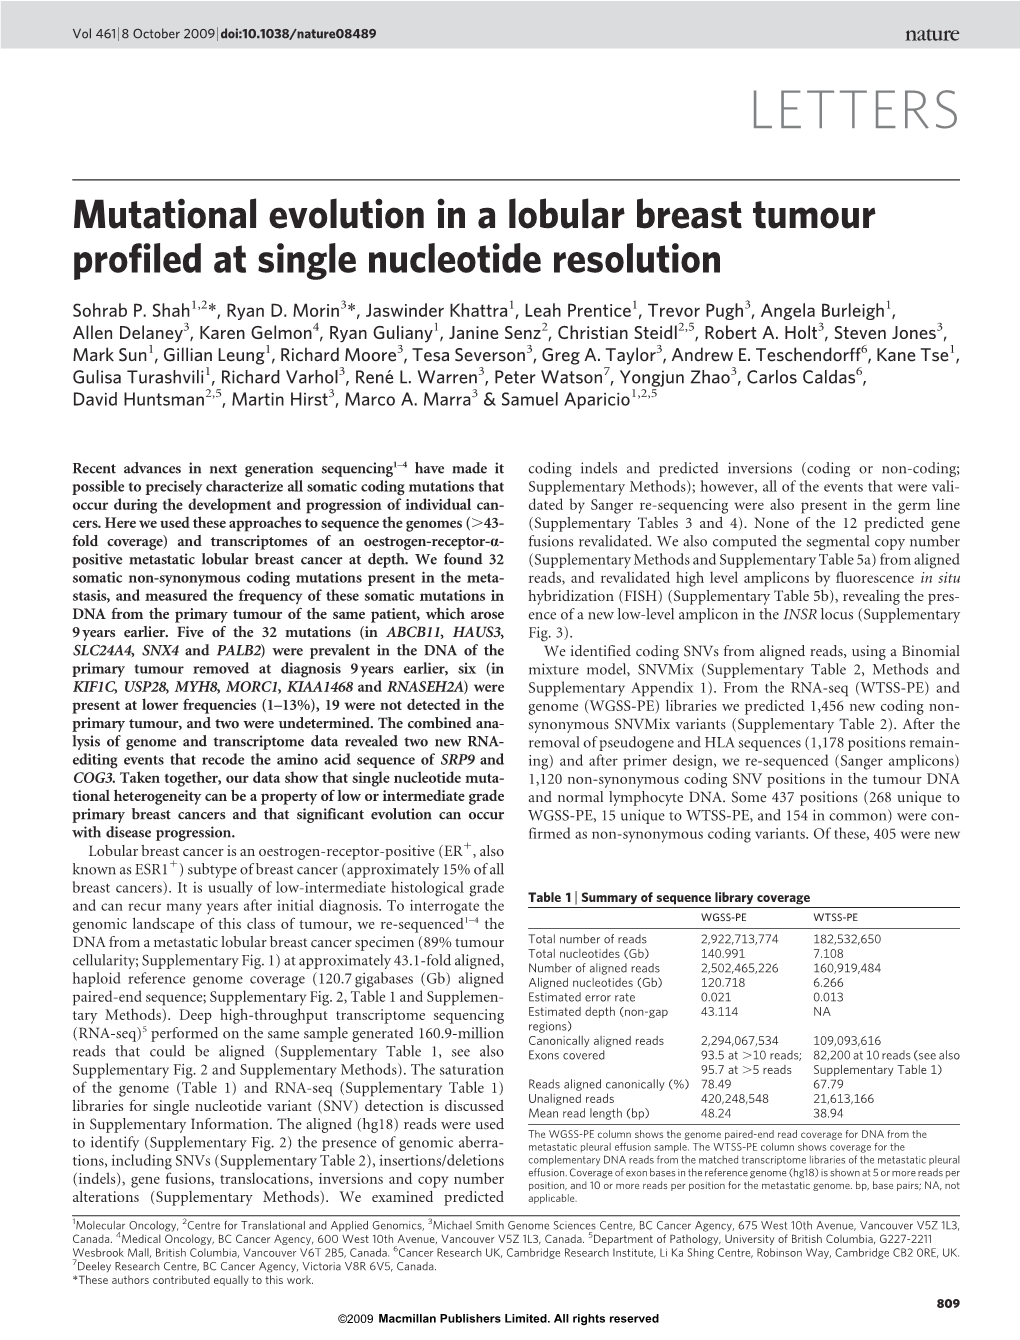 Mutational Evolution in a Lobular Breast Tumour Profiled at Single Nucleotide Resolution